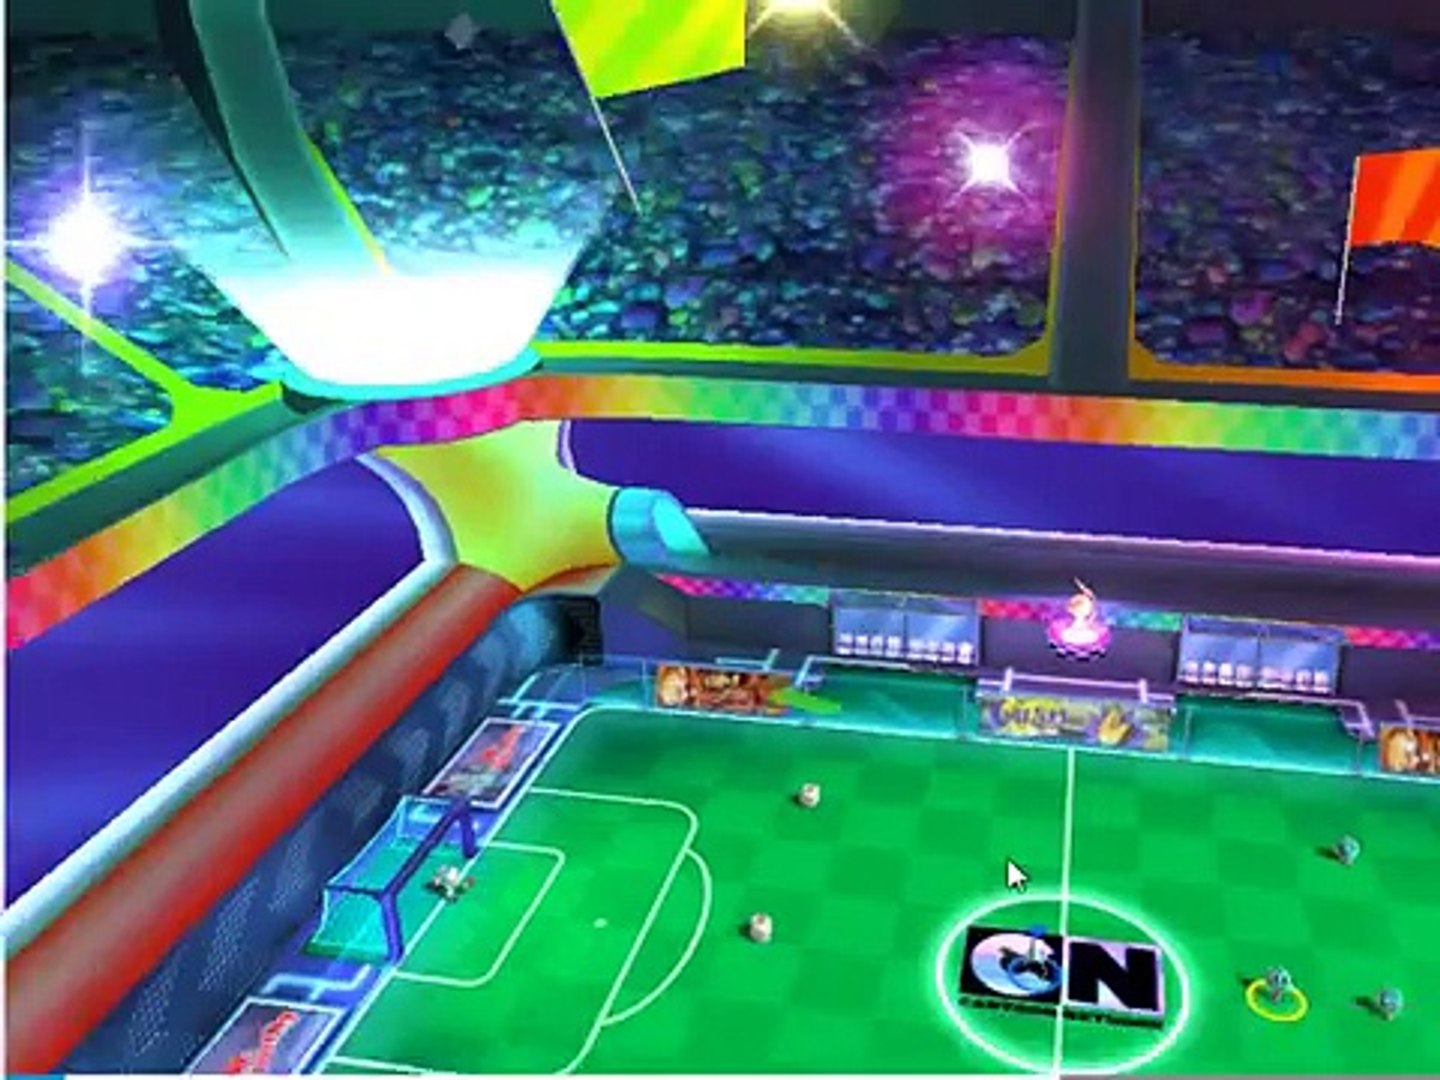 Superstar Soccer Copa Toon 2014 - Cartoon Network Oyunları - video  Dailymotion